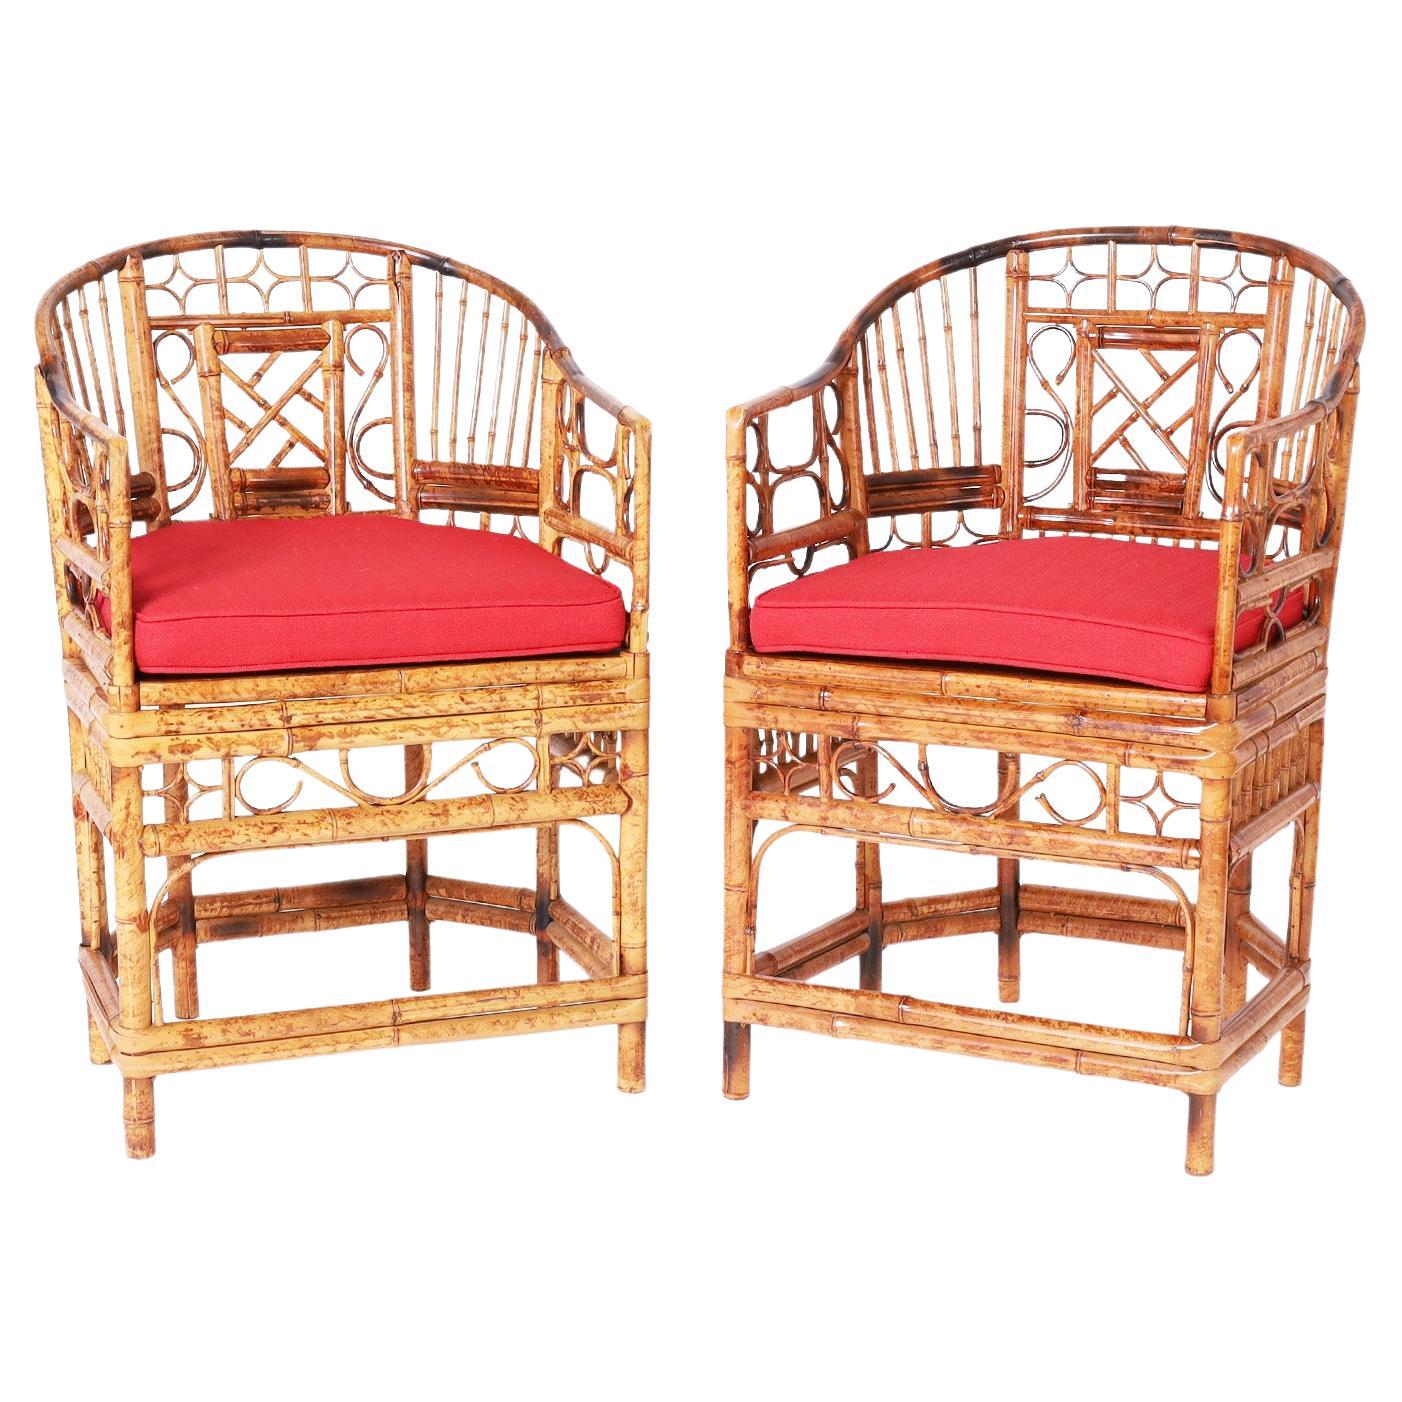 Pair of Brighton Pavilion Style Chairs